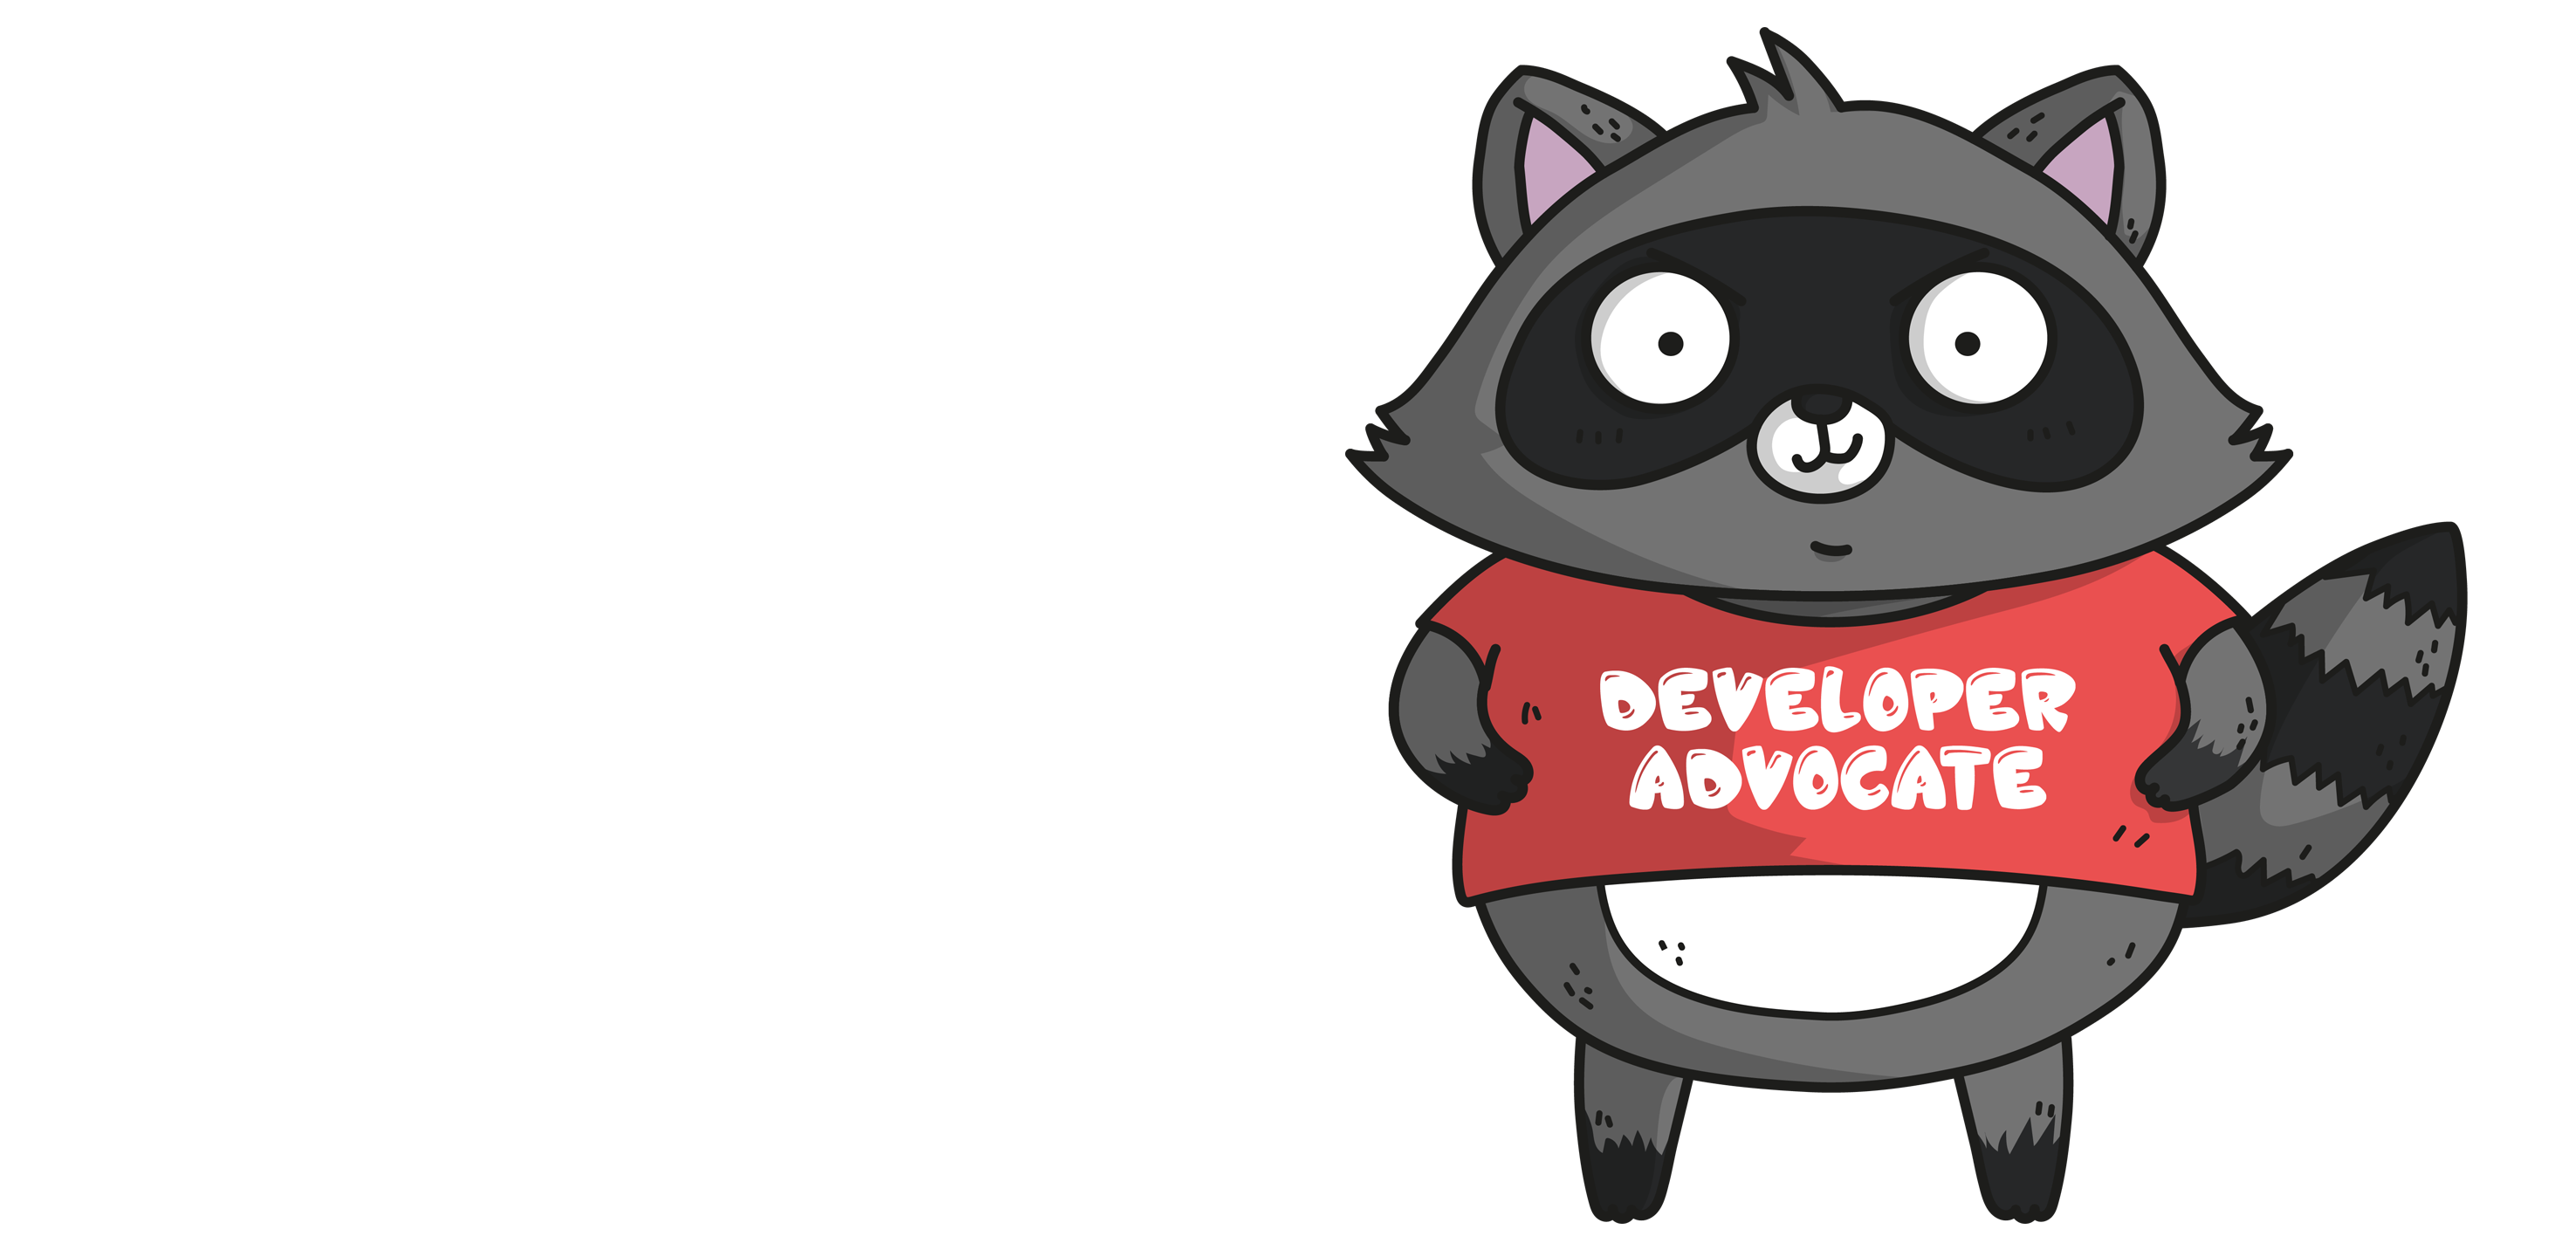 Developer Advocate Bit in a Red T-Shirt with Developer Advocate label.